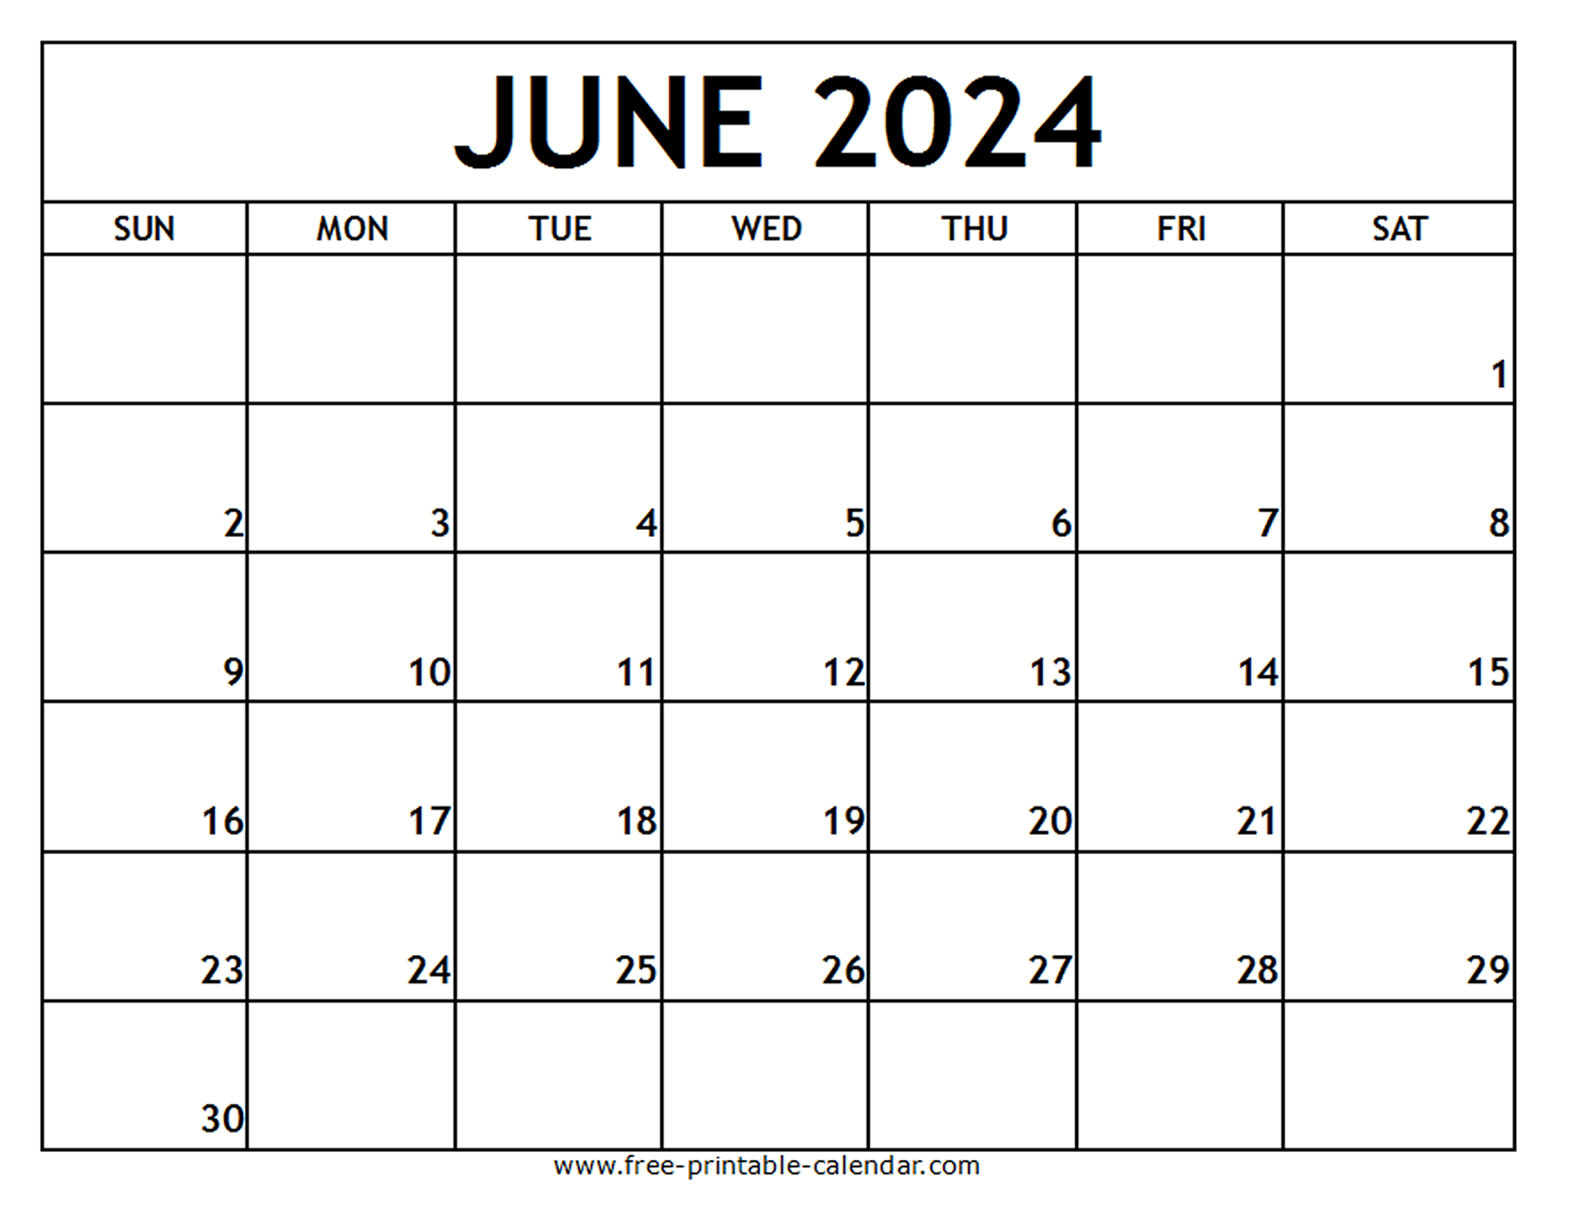 June 2024 Printable Calendar - Free-Printable-Calendar inside June 2024 Printable Calendar Pdf